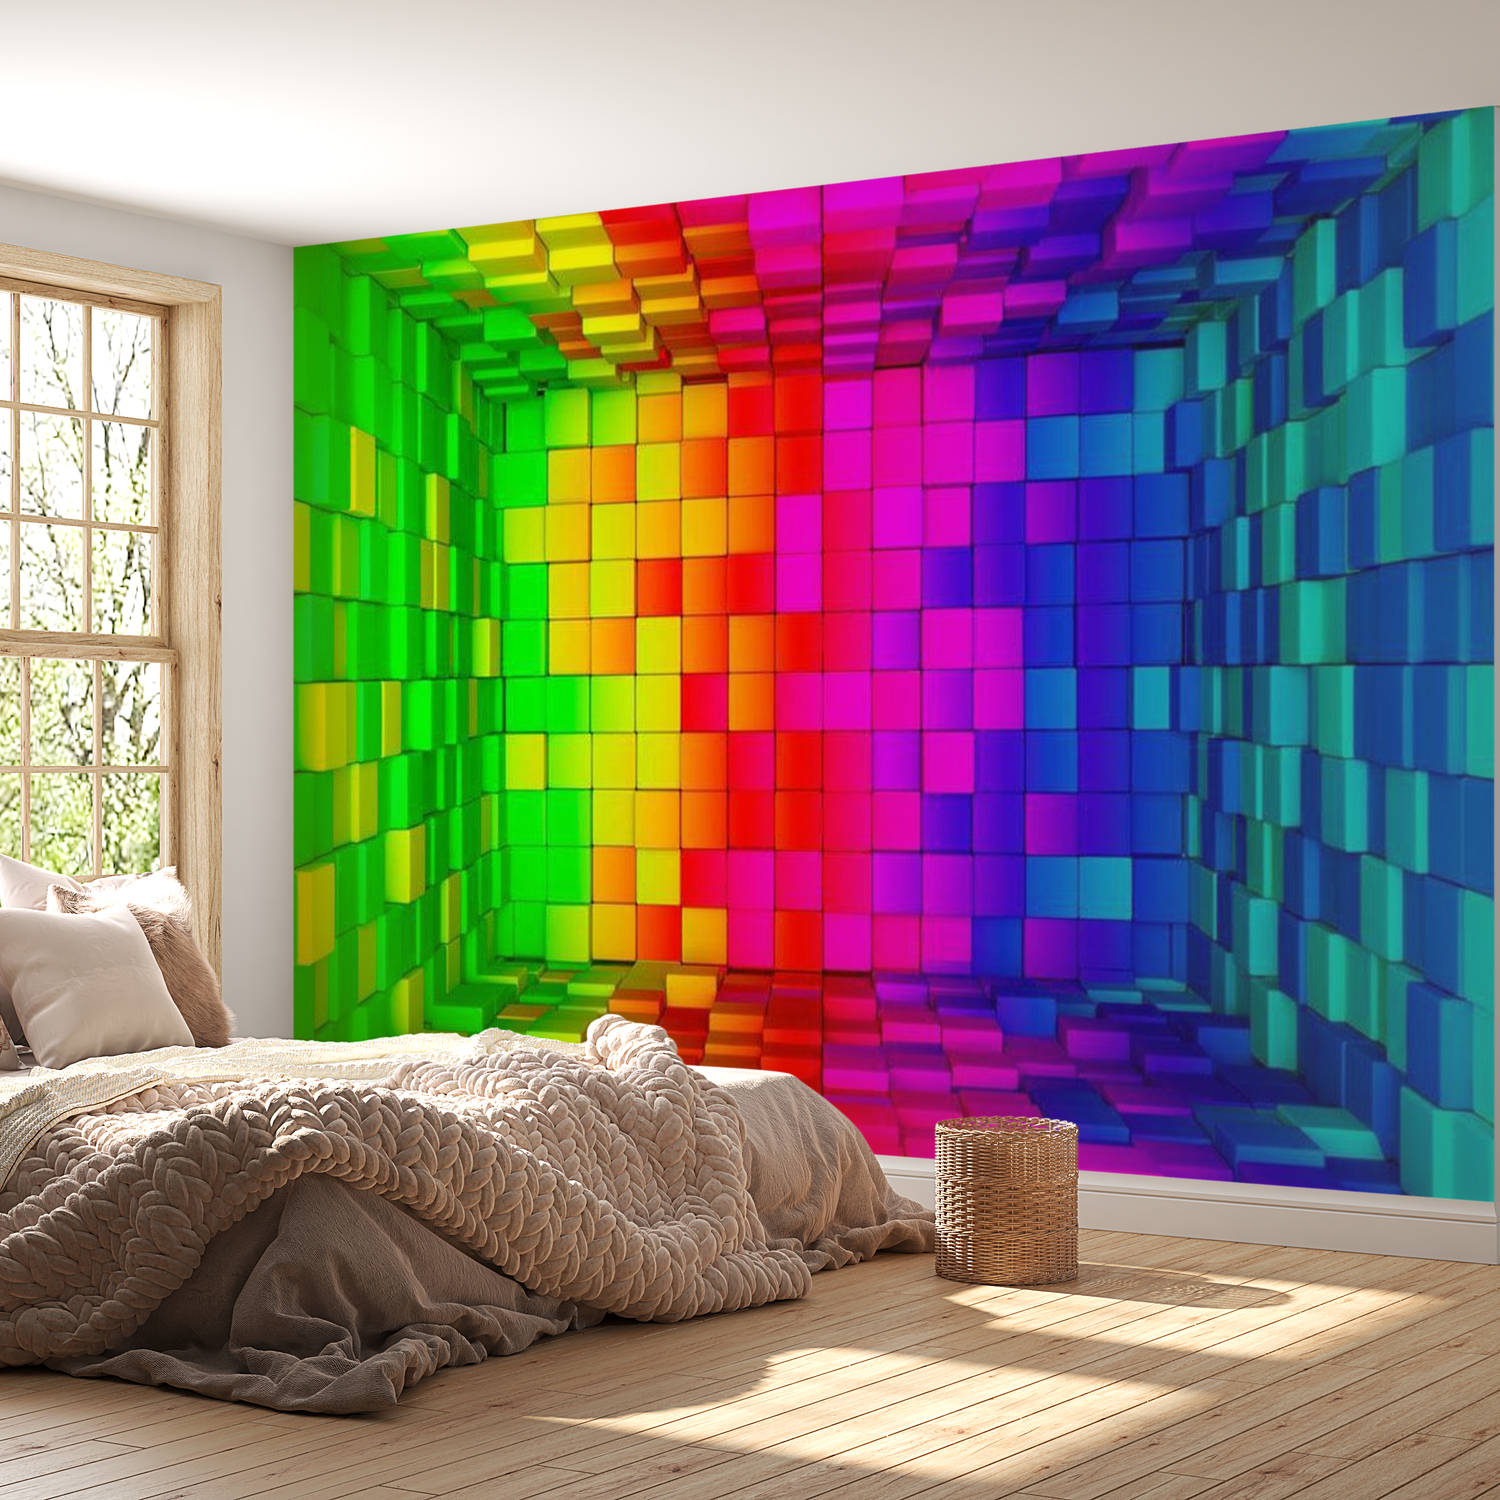 3D Illusion Wallpaper Wall Mural - Rainbow Cube 39"Wx27"H